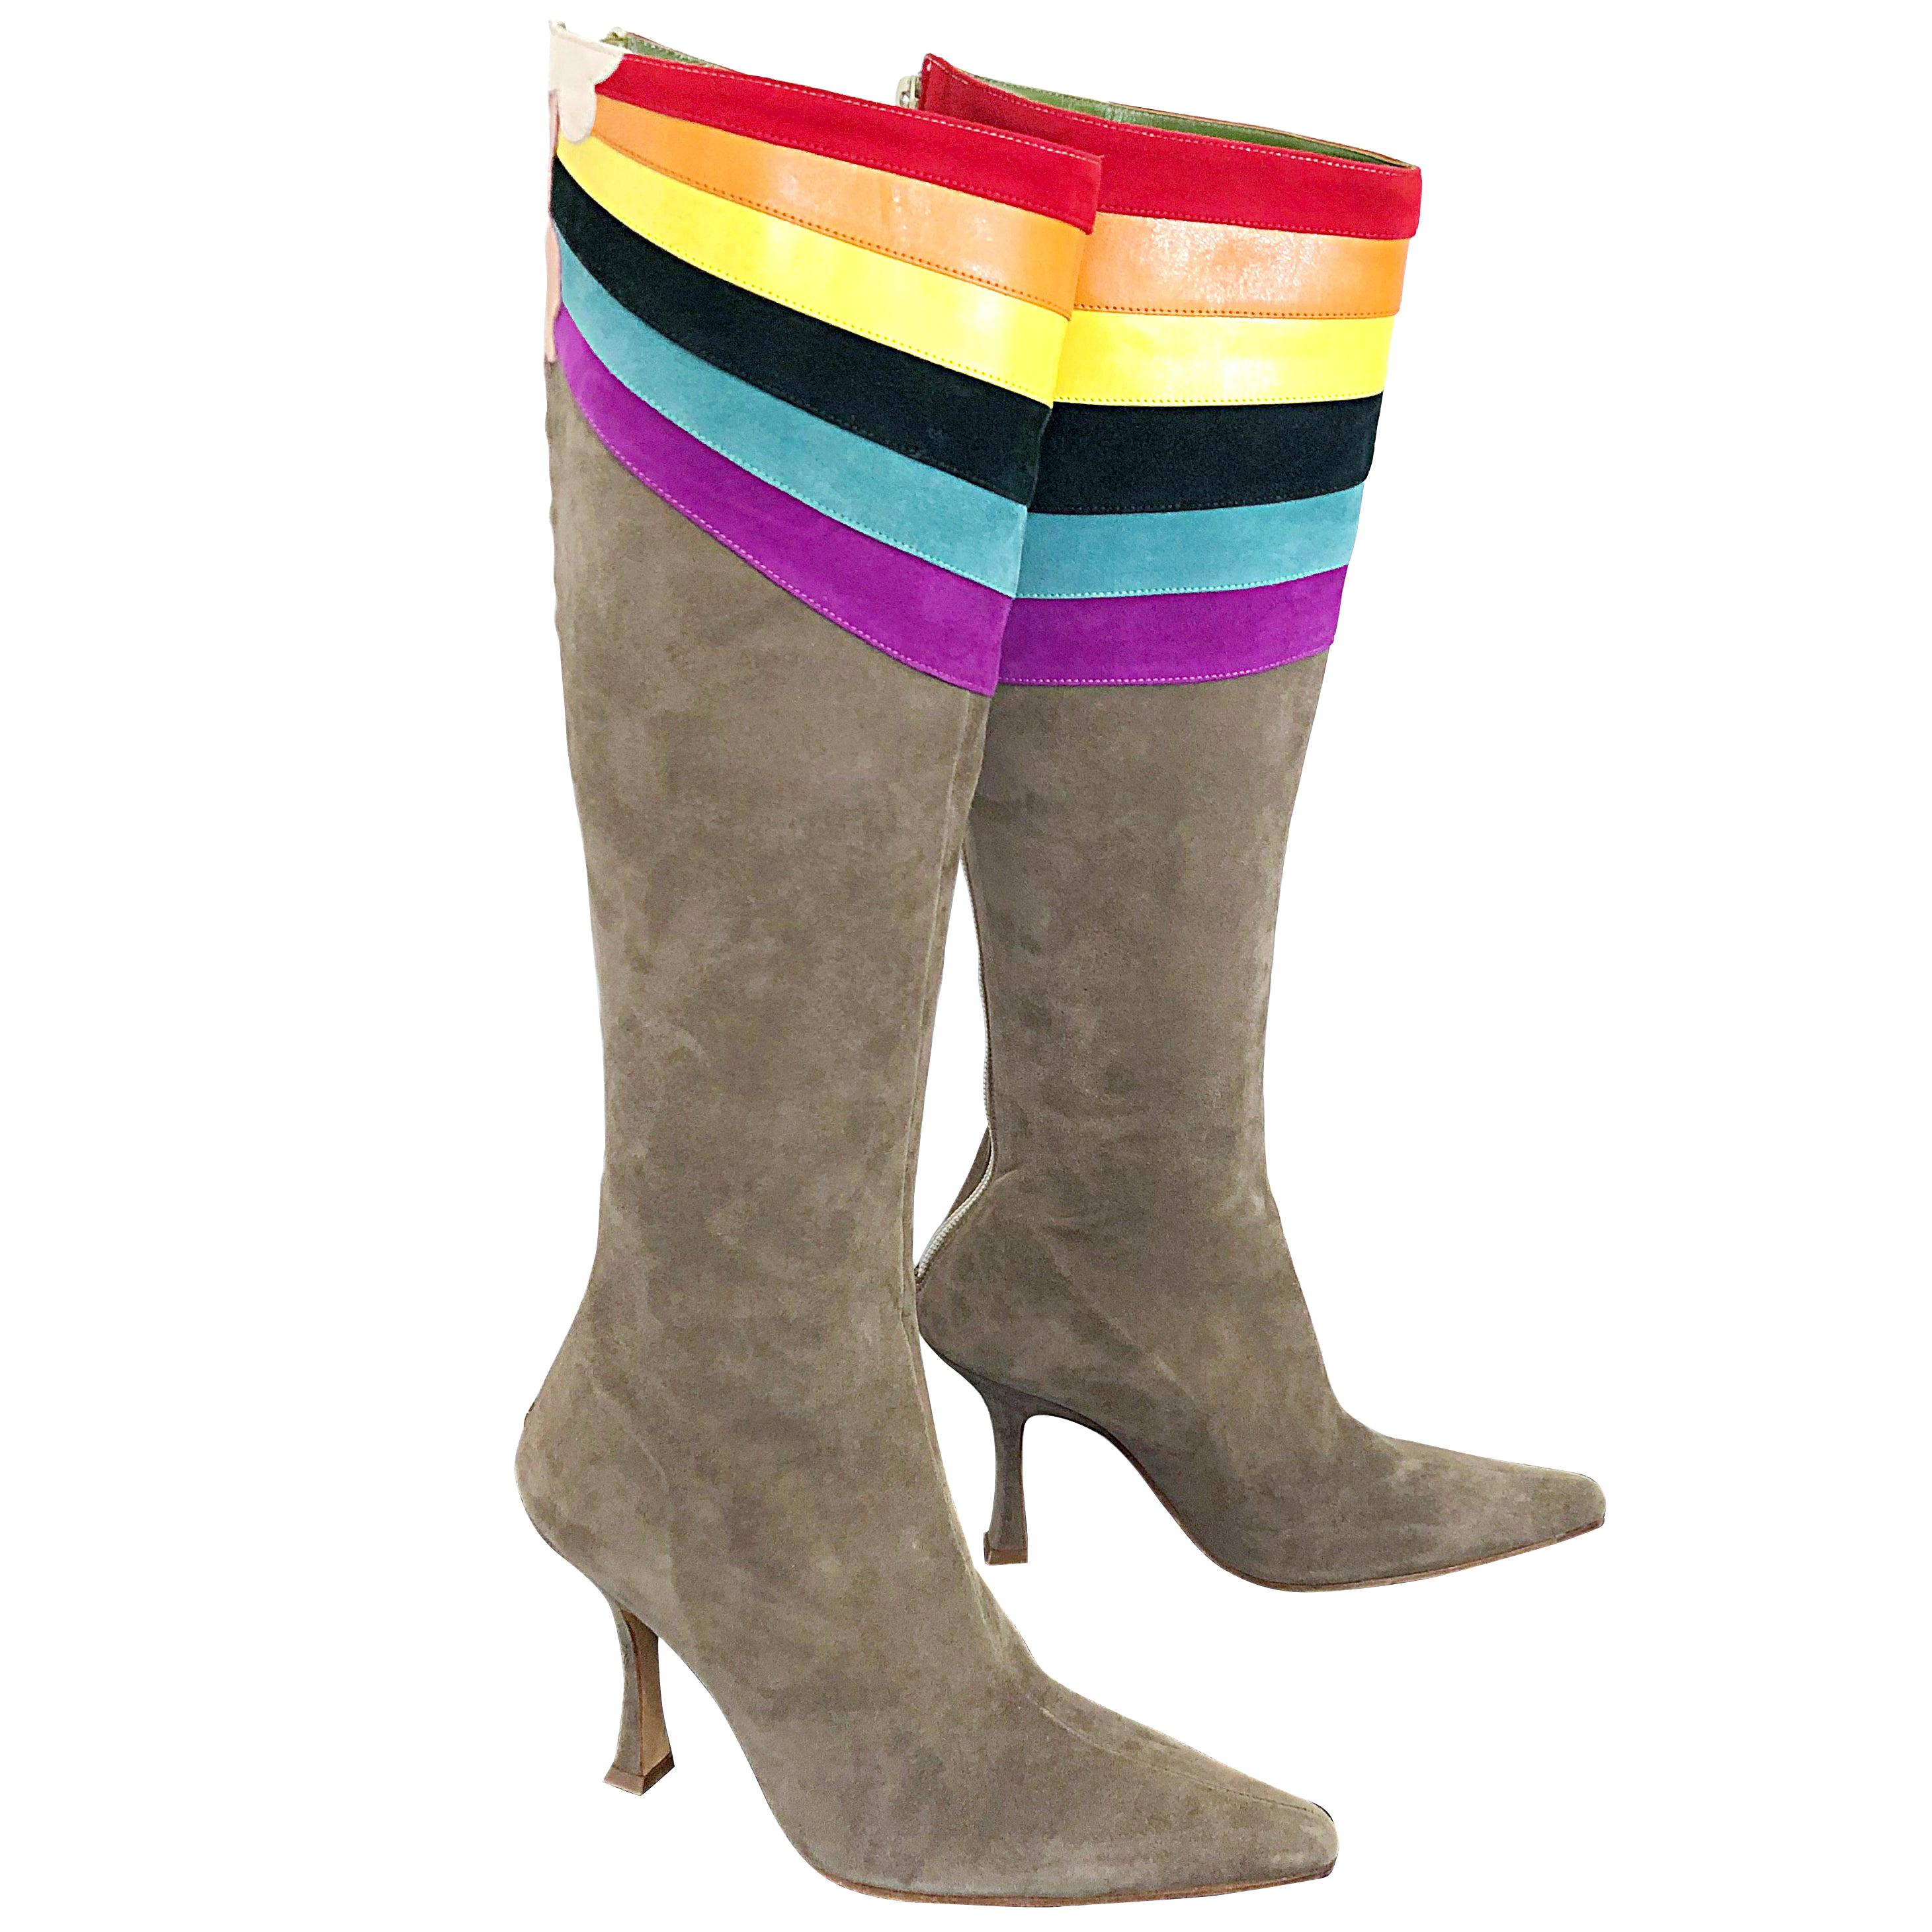 New Ashley Dearborn Size 6 / 36 Gay Pride Pegasus Rainbow High Heel Suede Boots